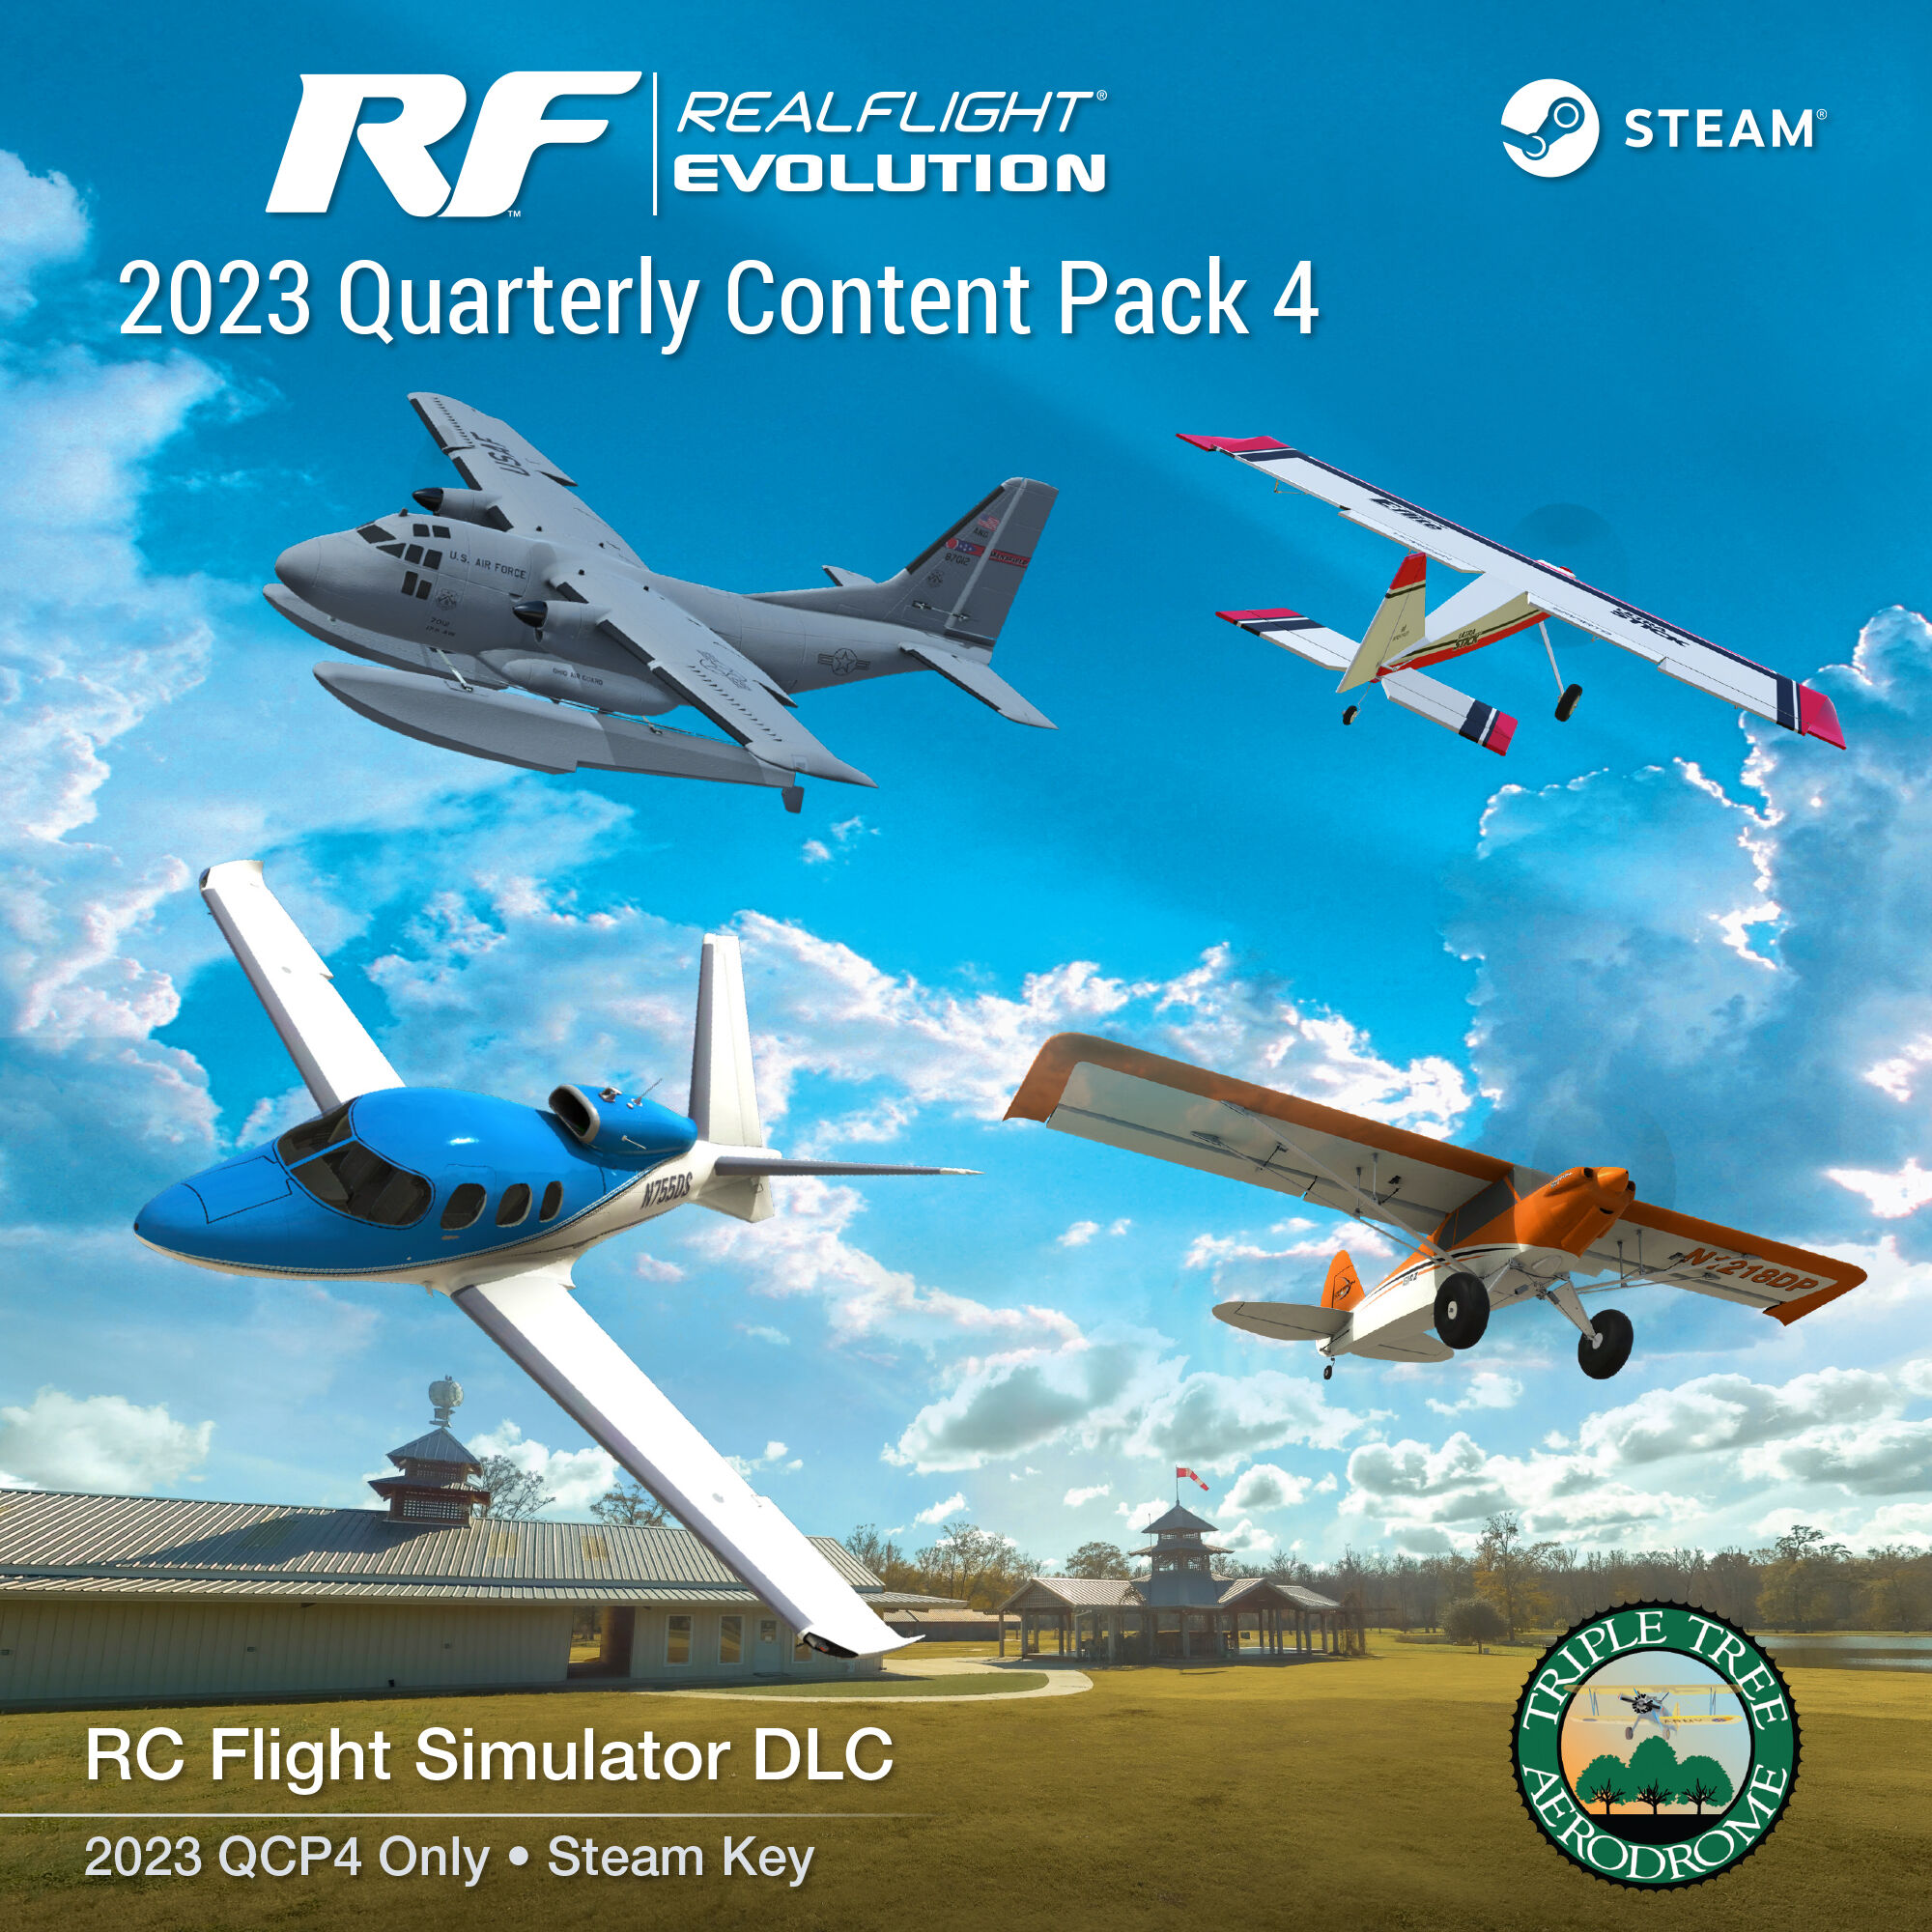 Shop RealFlight RC Flight Simulators and Products | RealFlight